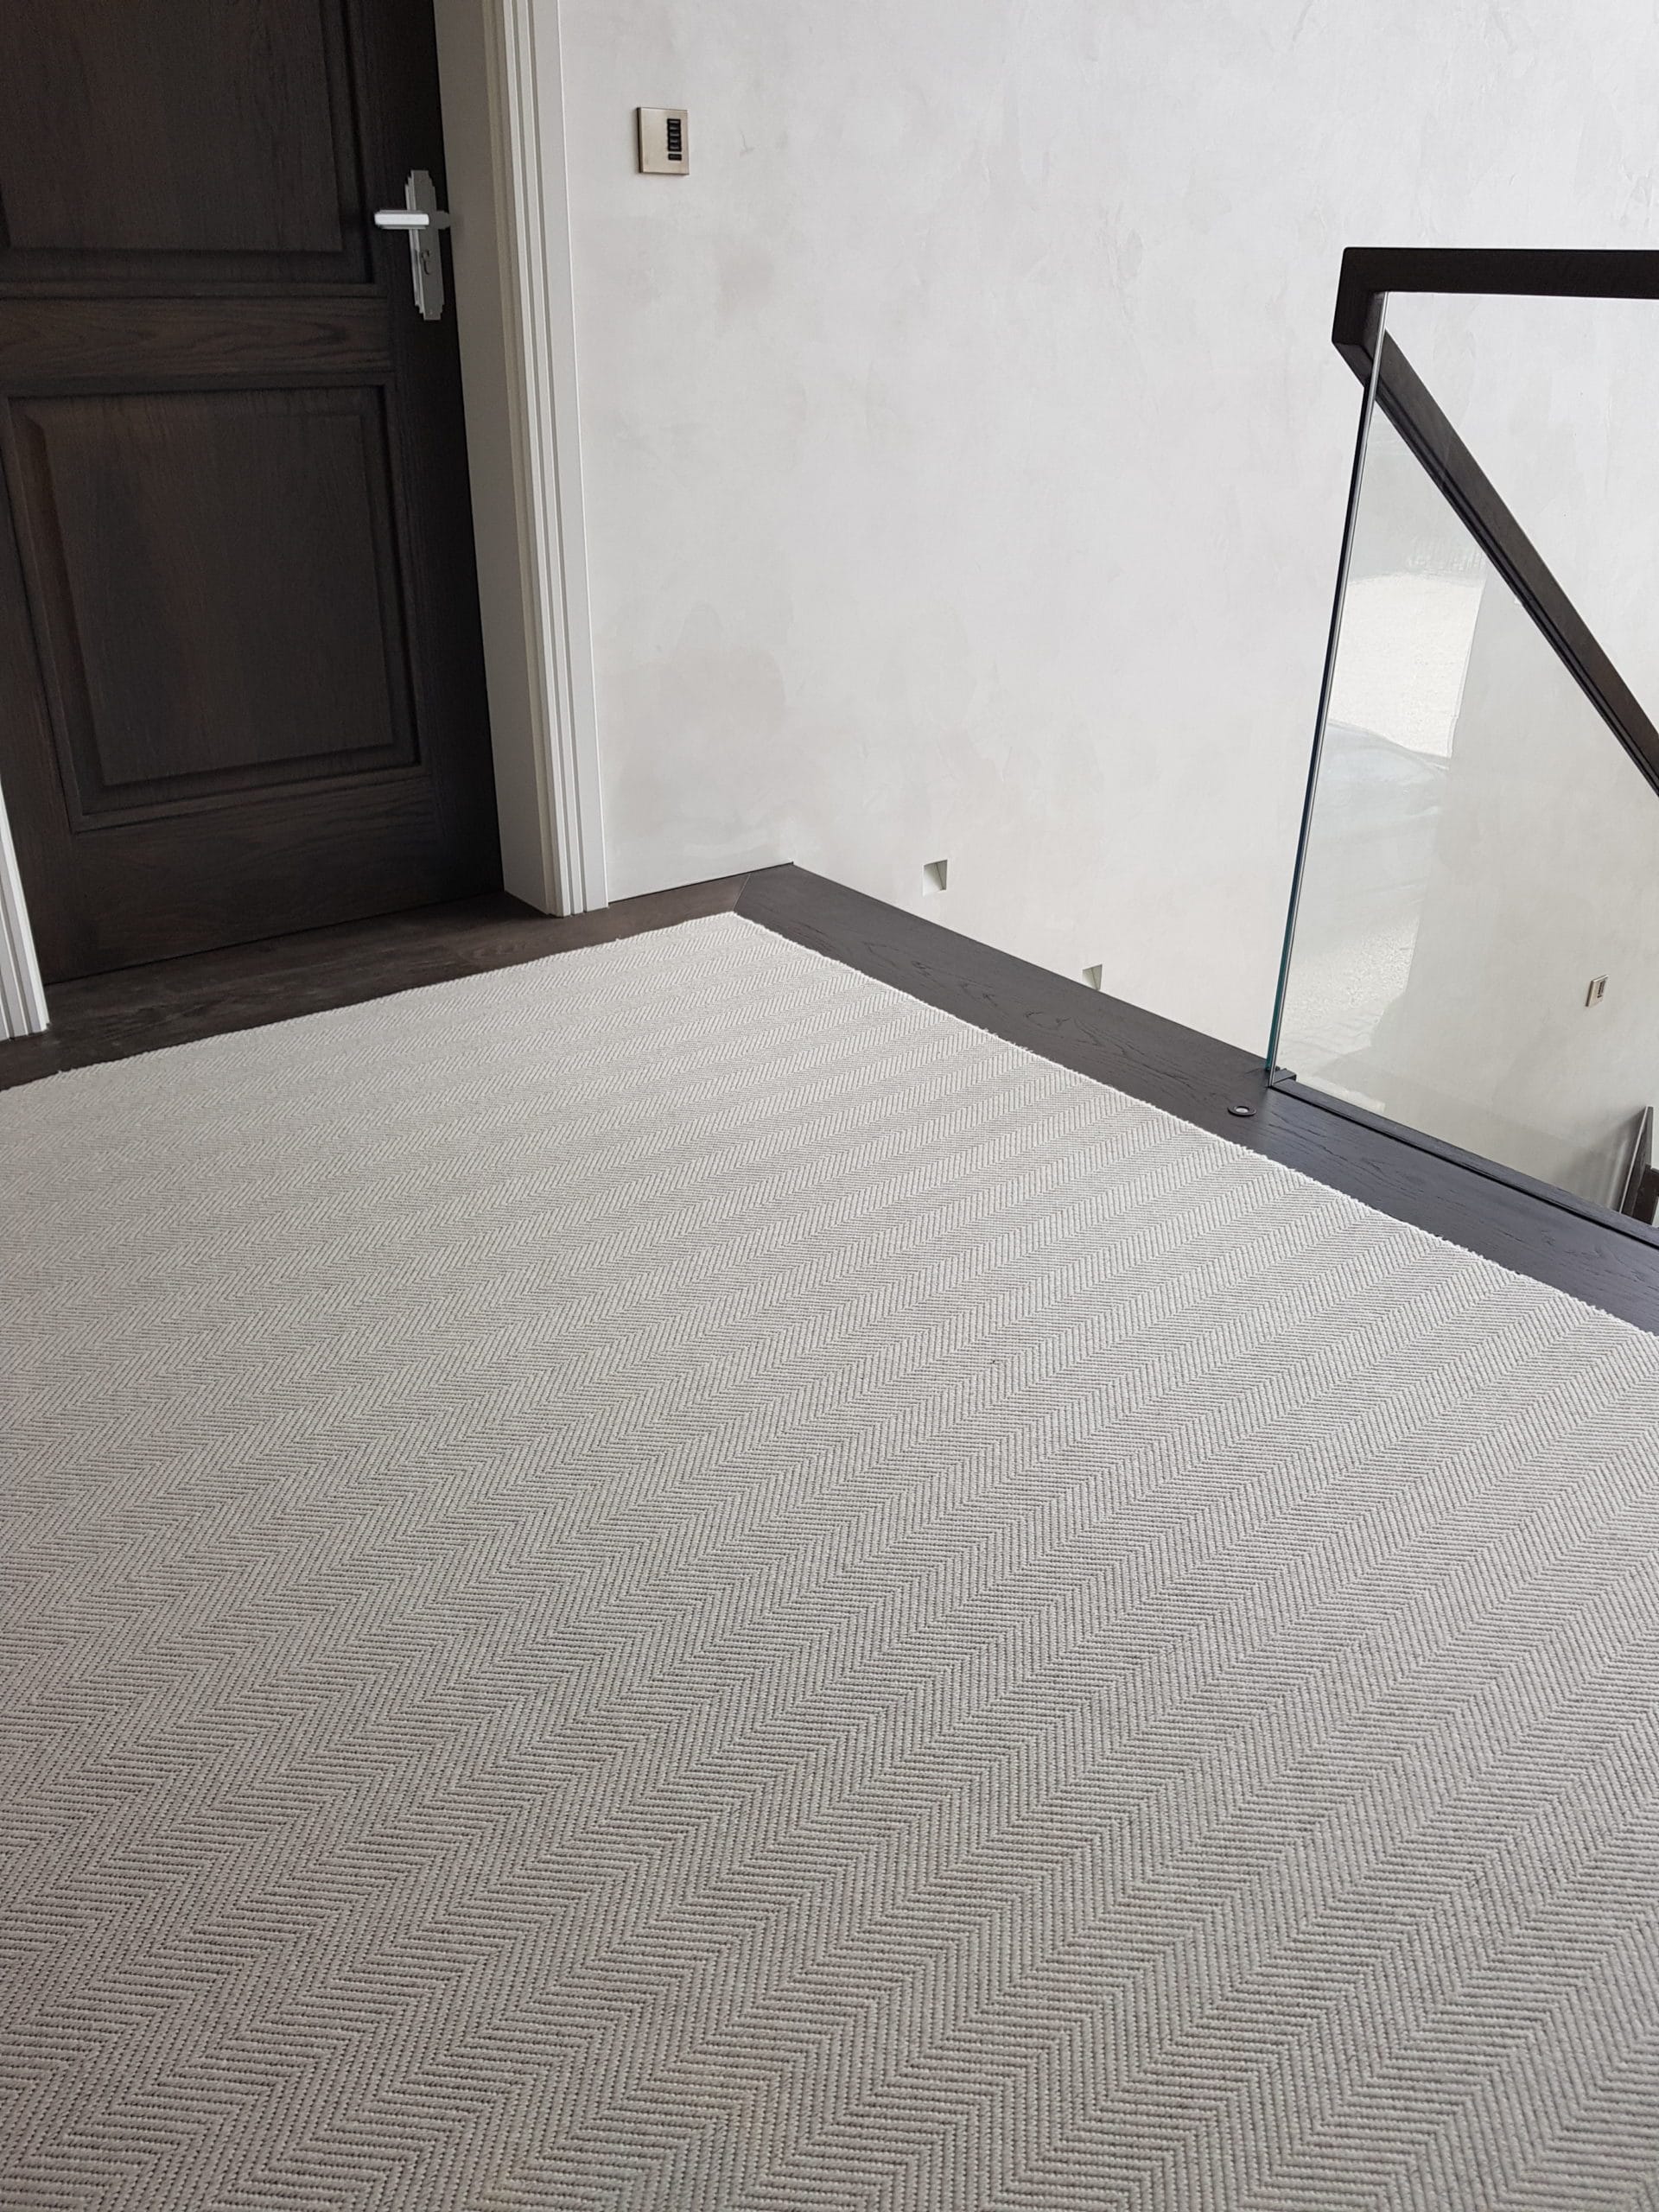 Wool Herringbone Chartwell inlaid carpet with wood floor border